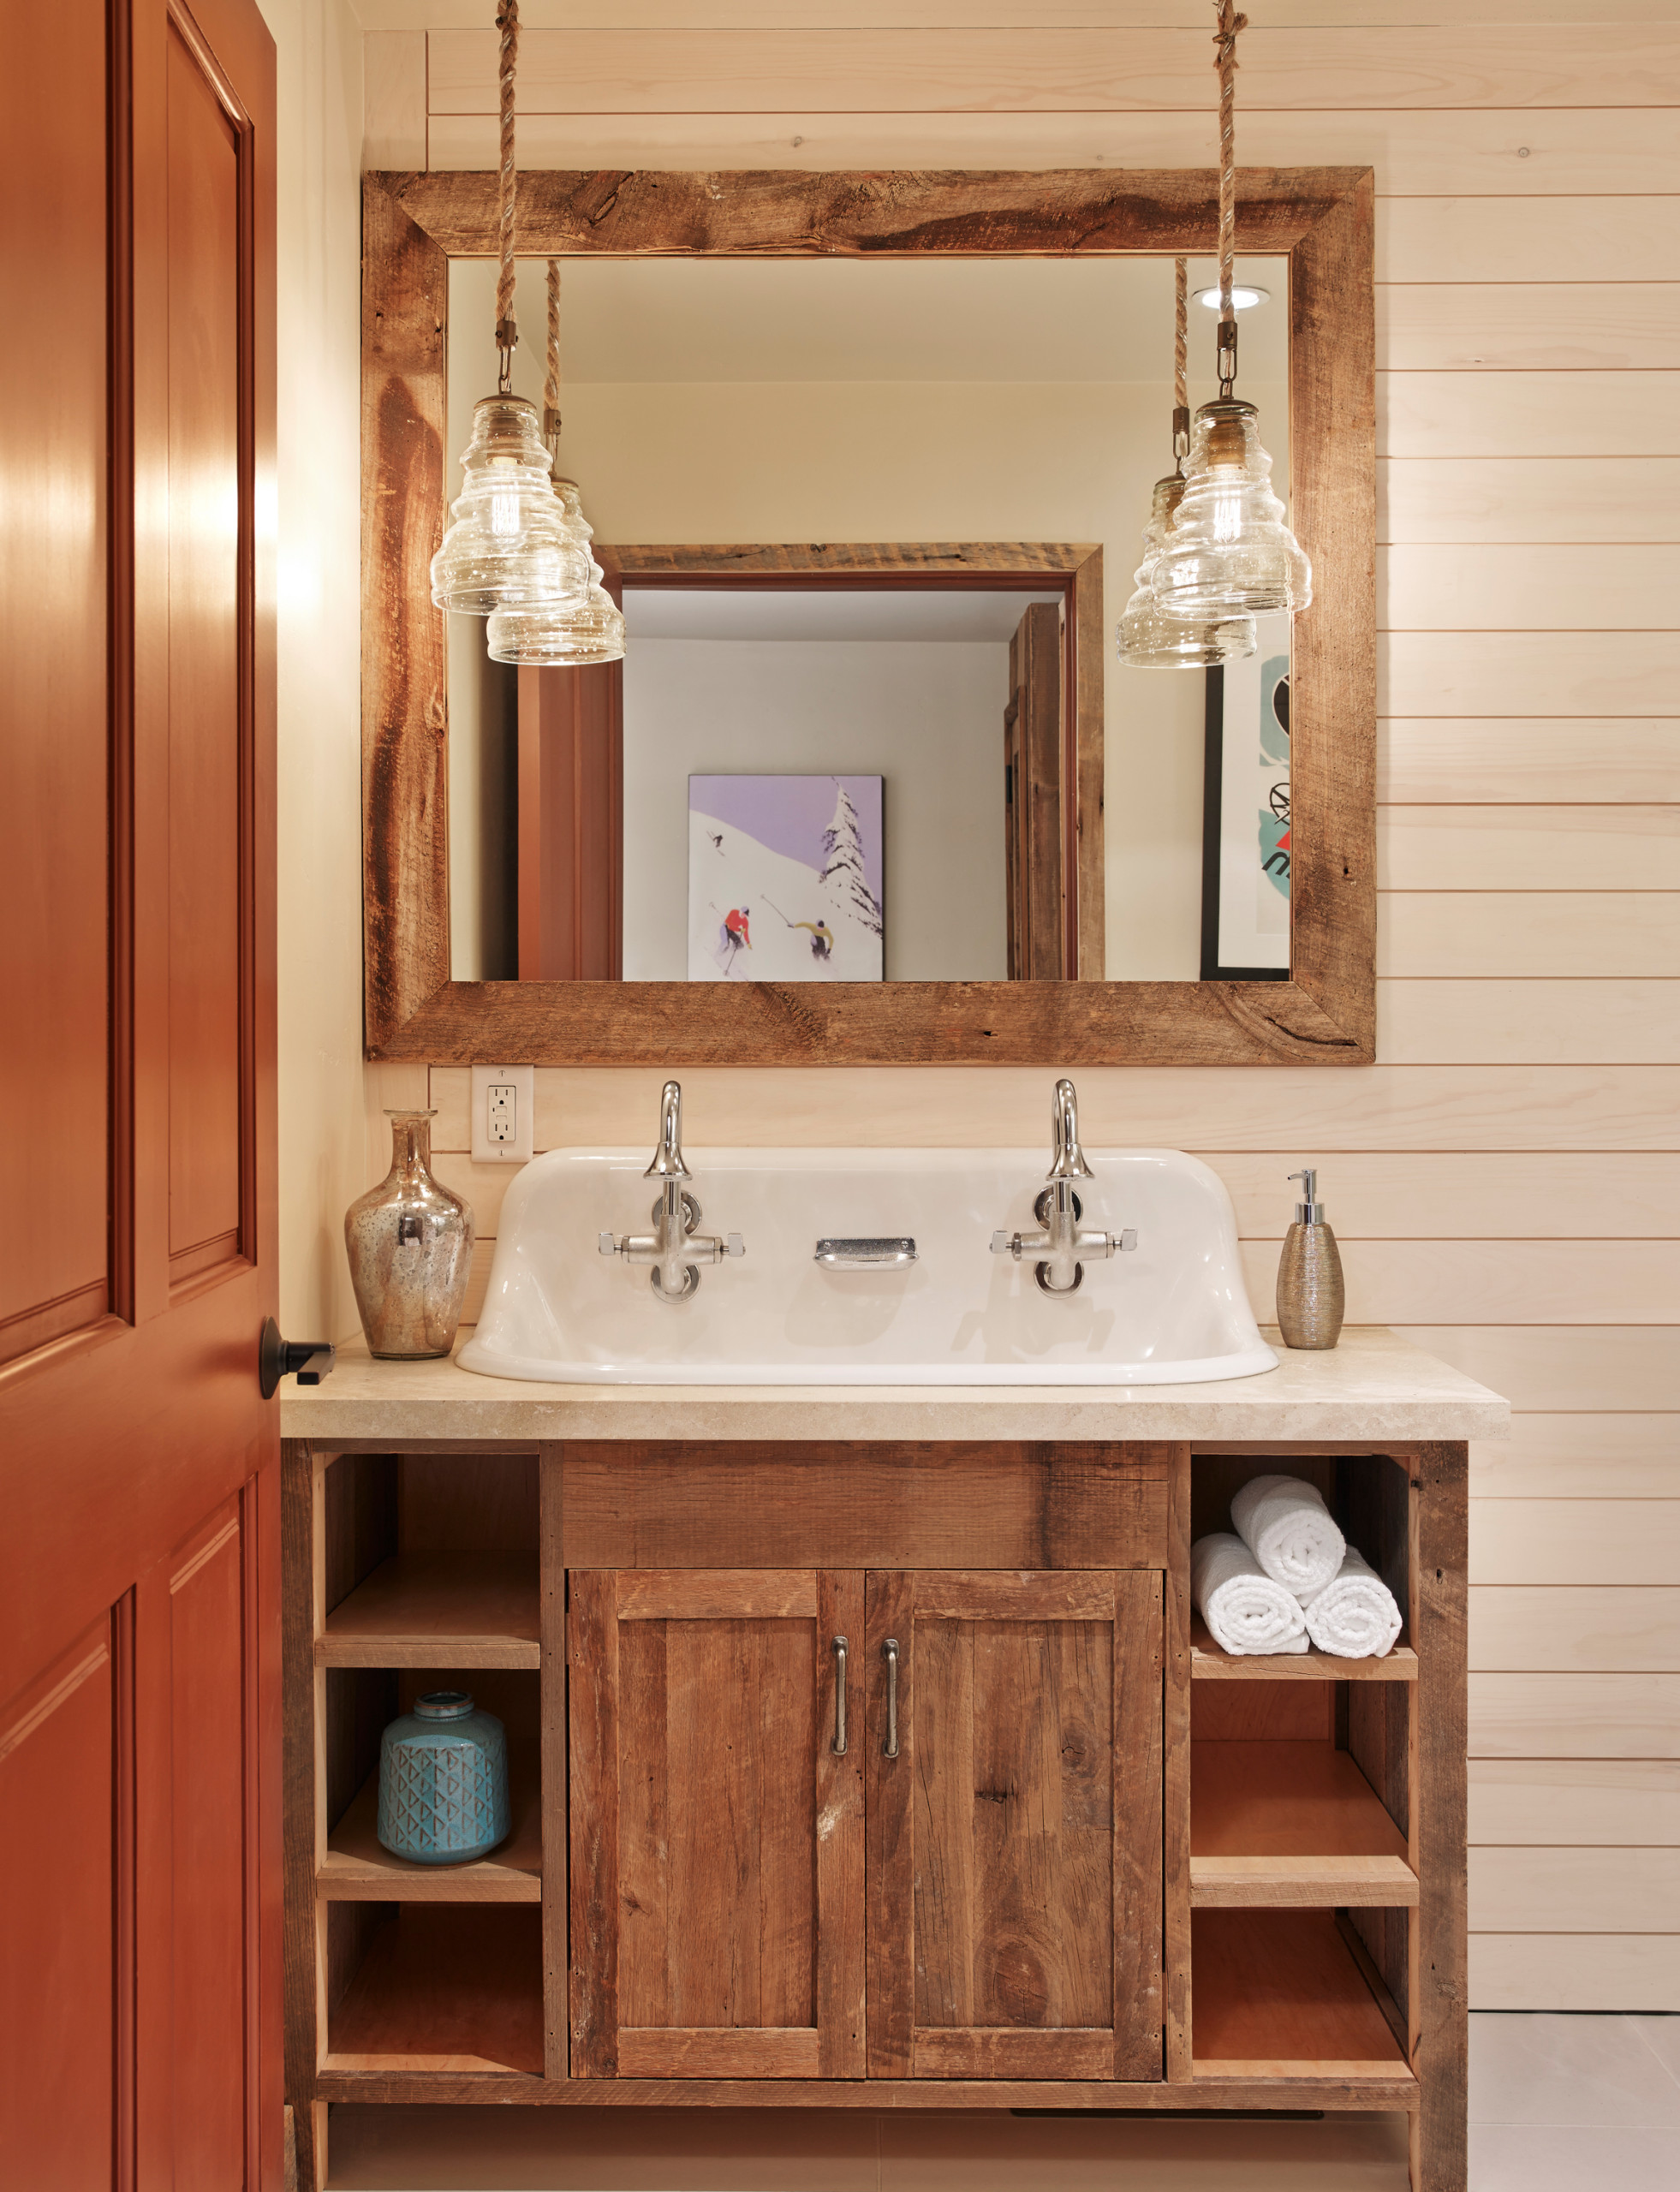 Rustic Mountain Cabin Bathroom Ideas Houzz